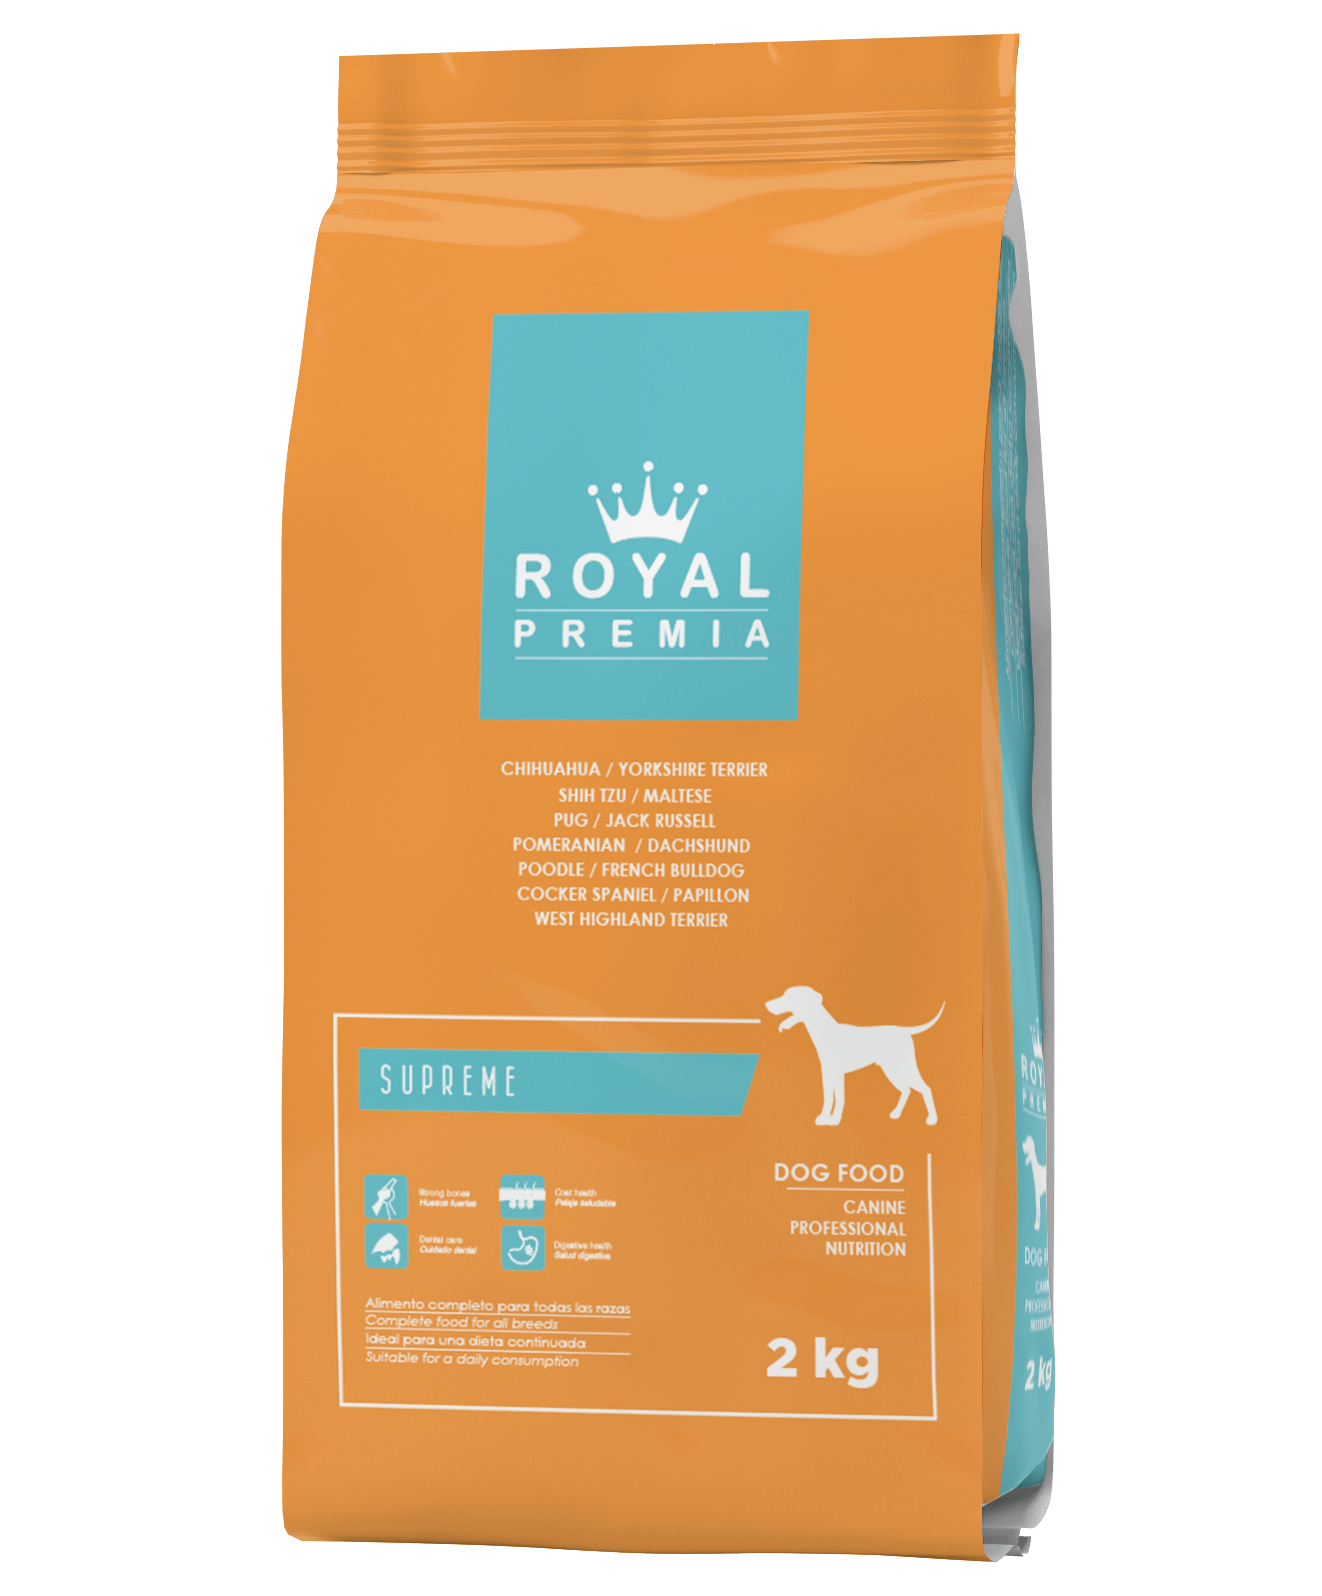 Royal Premia Dry Dog Food and Puppy Food 2kg in Sharjah, Dubai